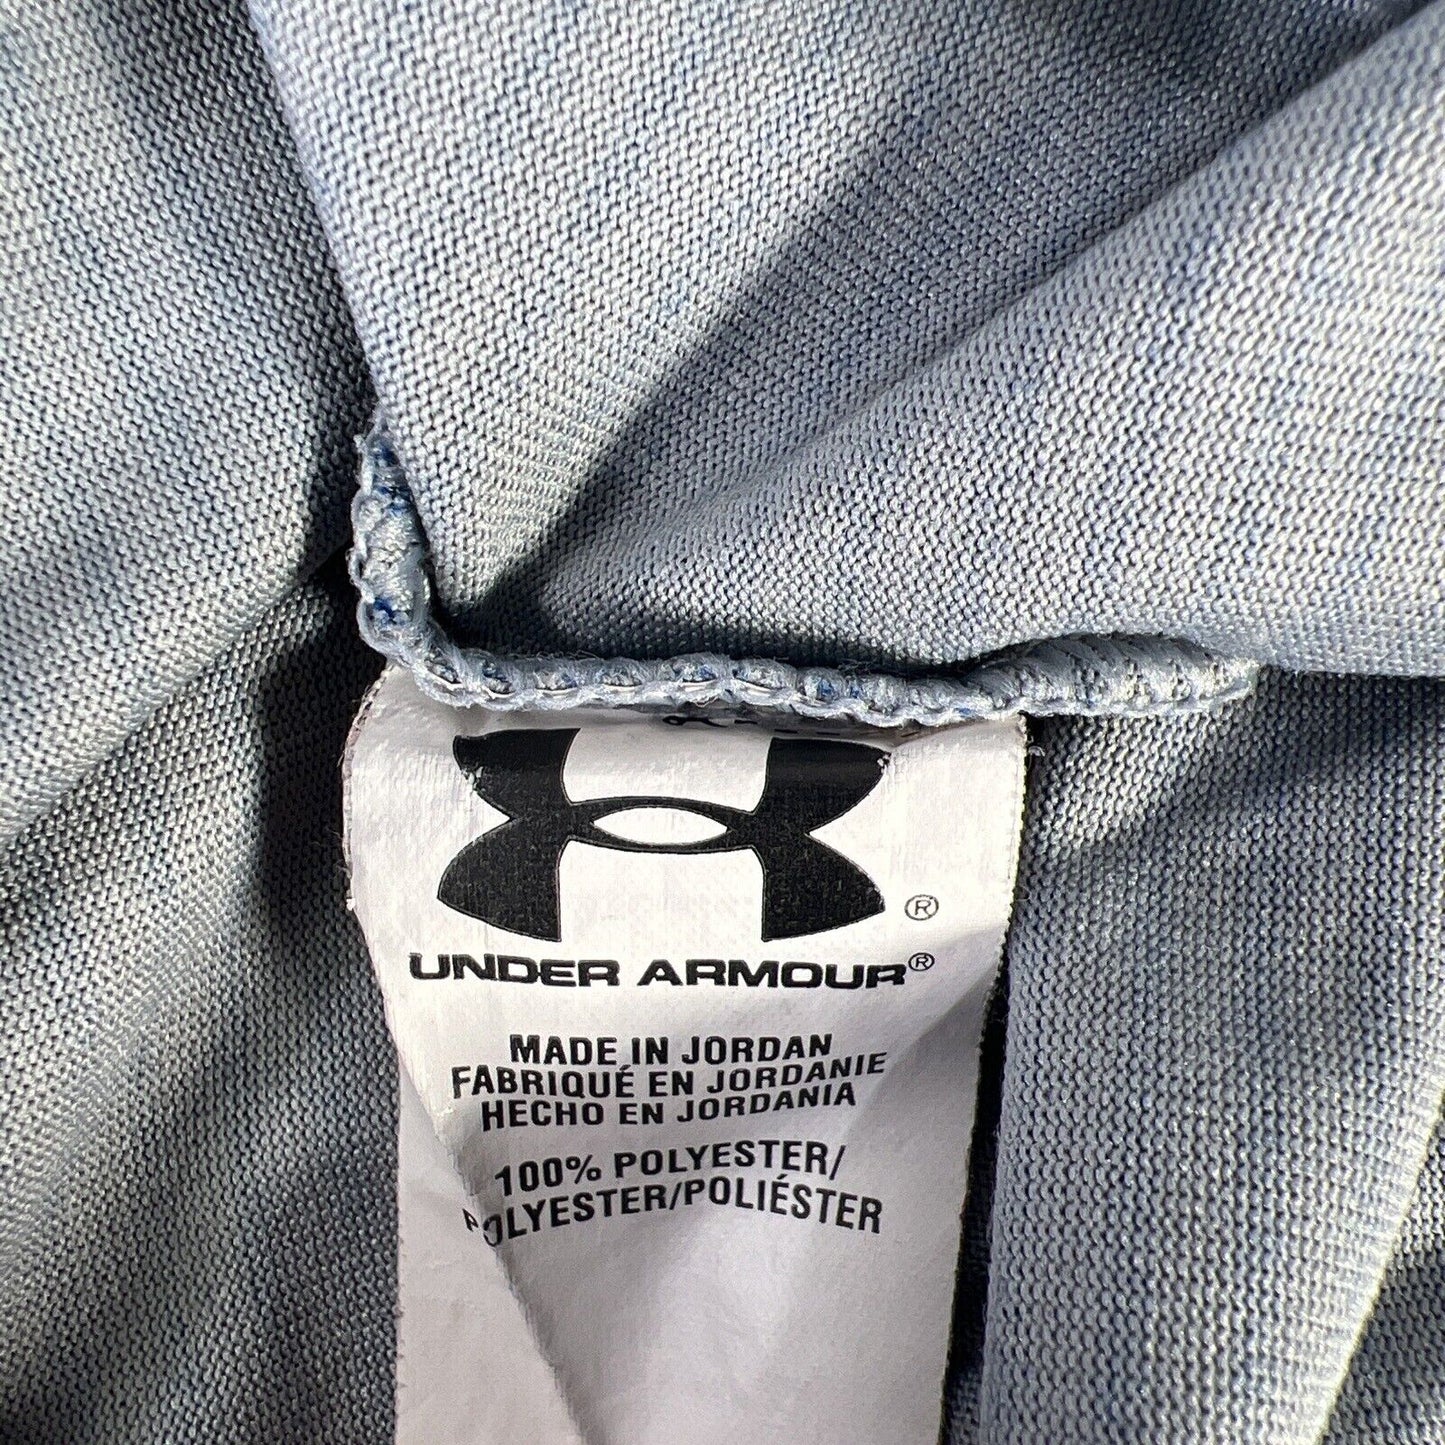 Under Armour Men's Gray/Blue Striped HeatGear Athletic Shirt - XL